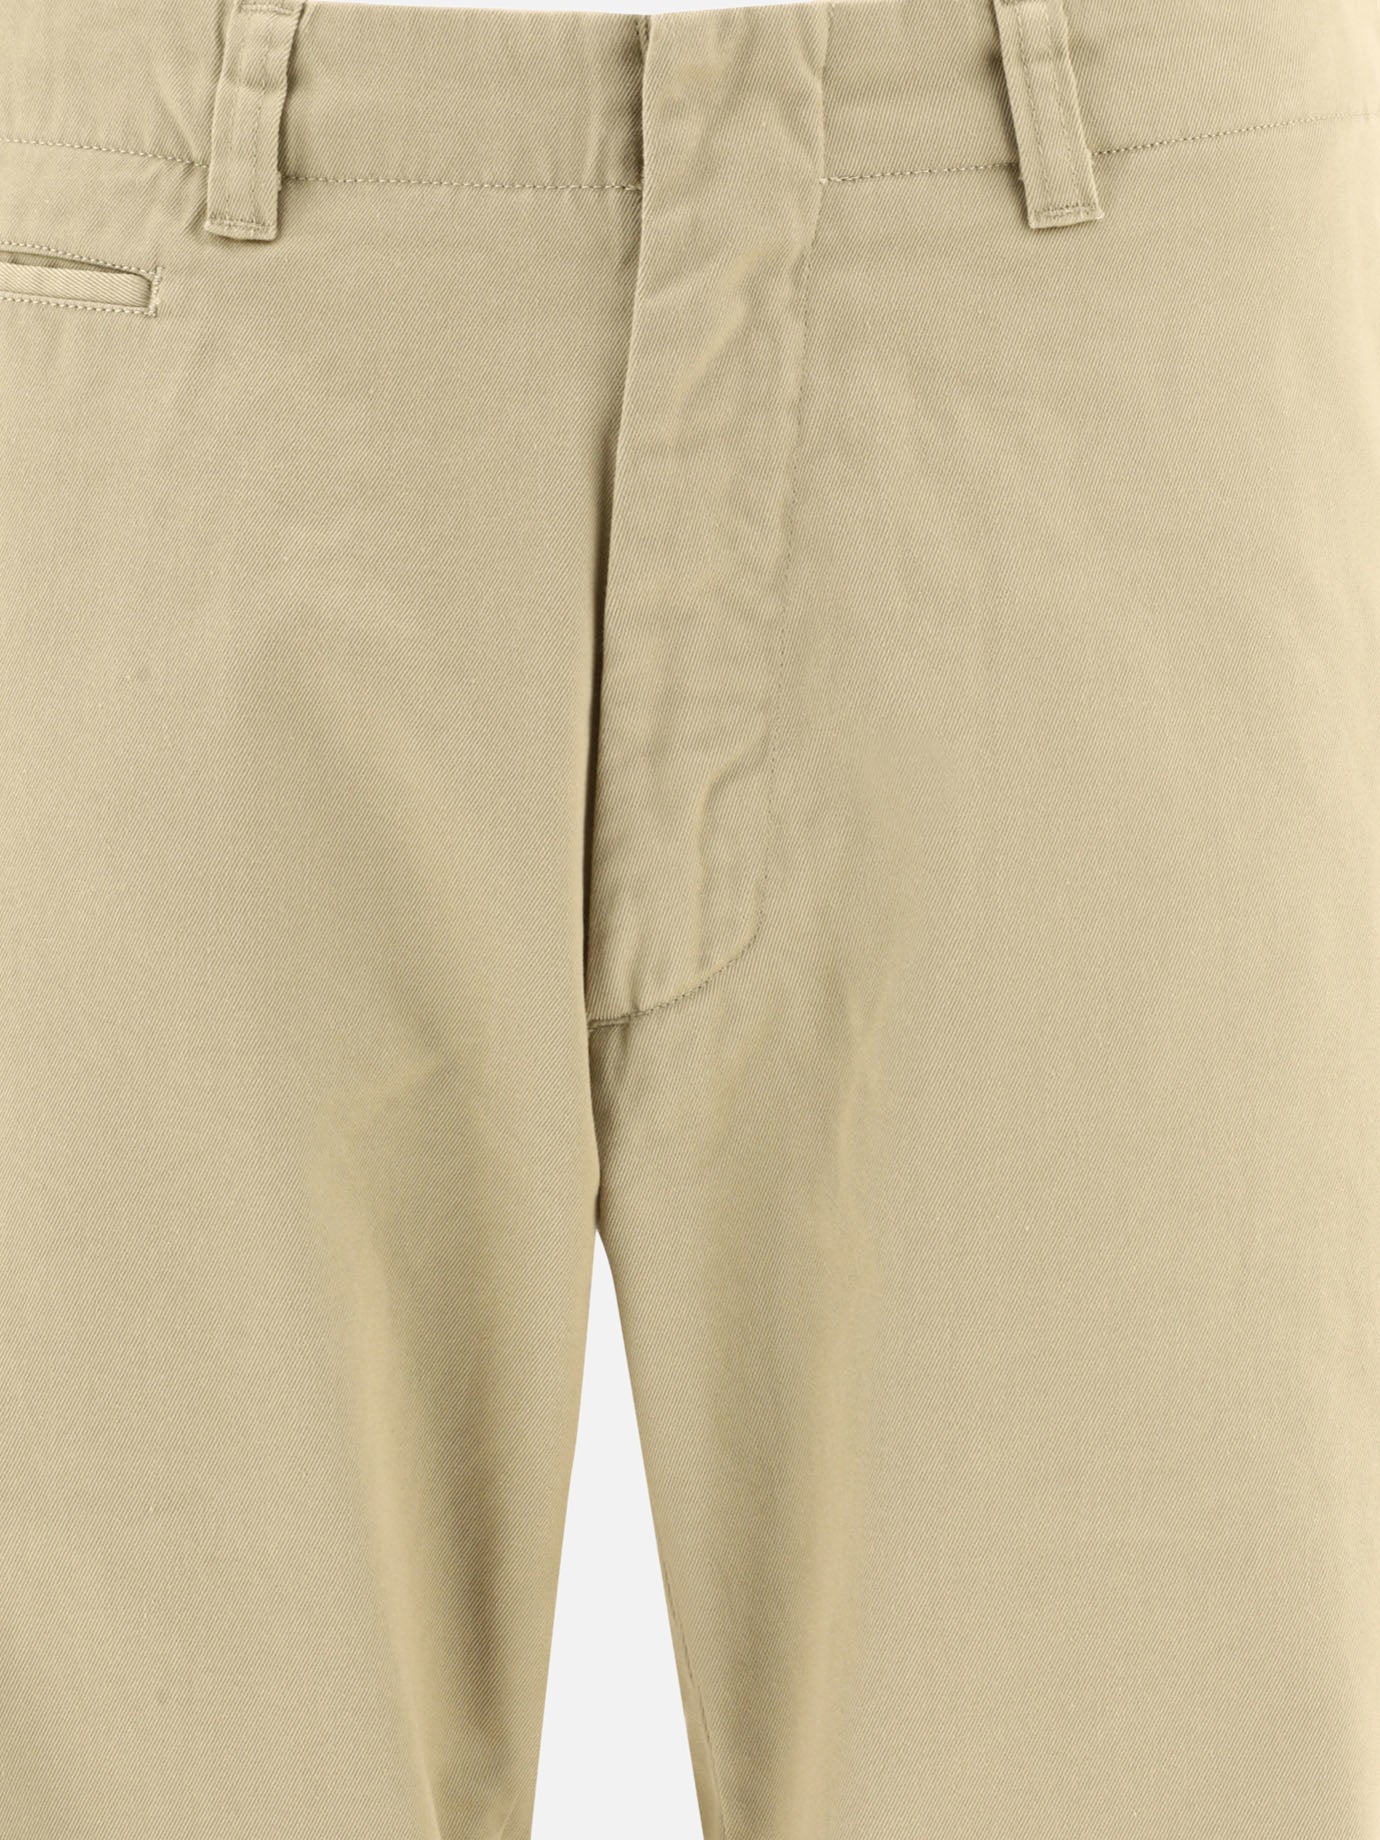 "Straight Chino" trousers